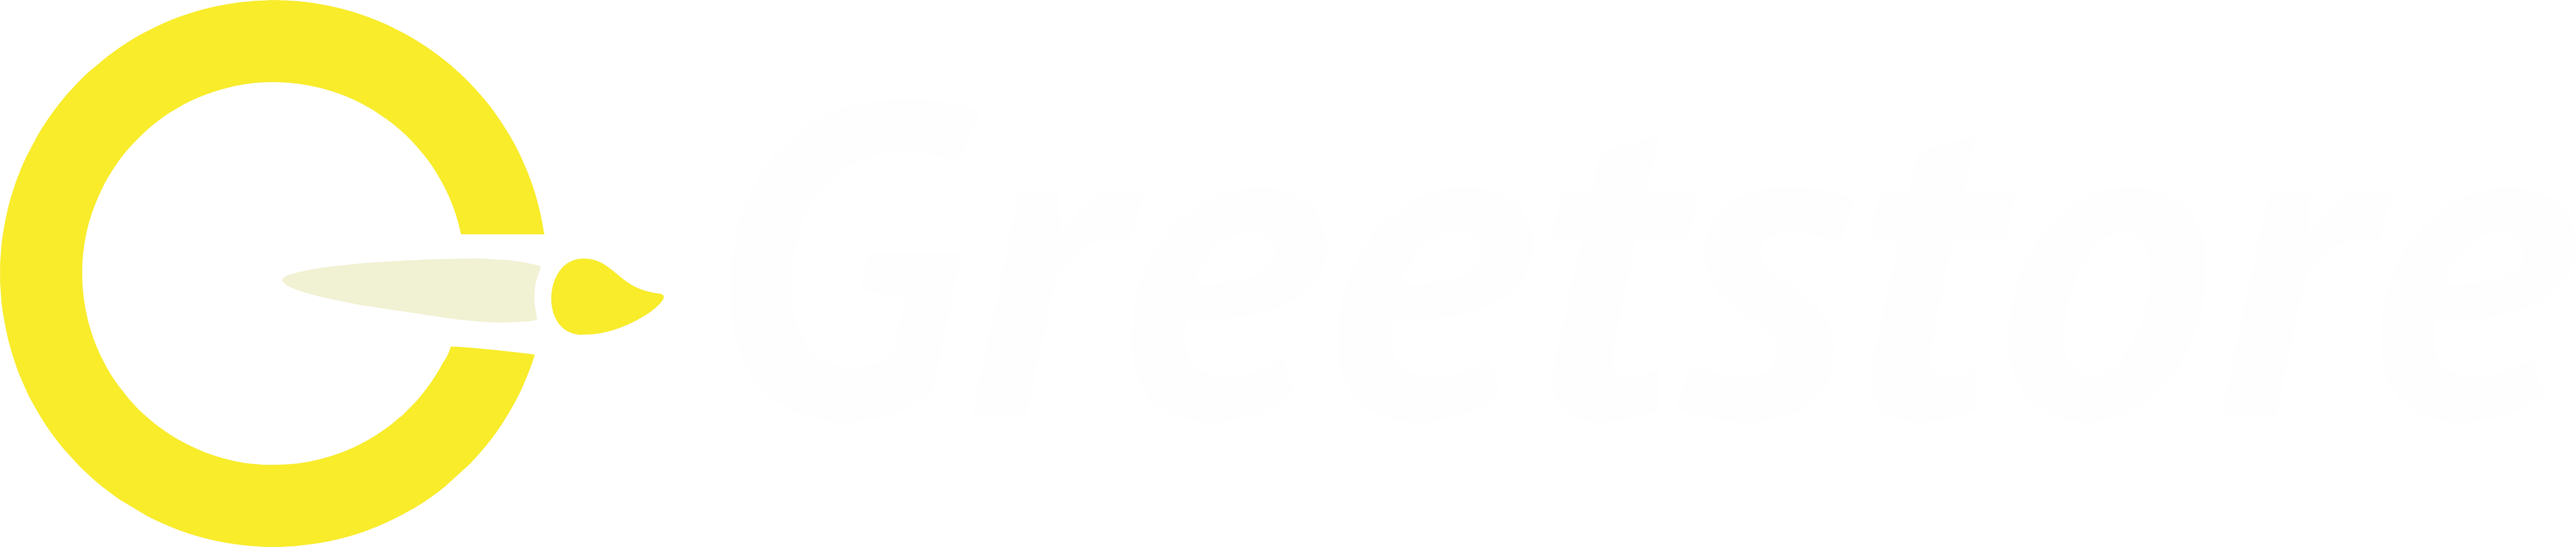 GreetStore logo